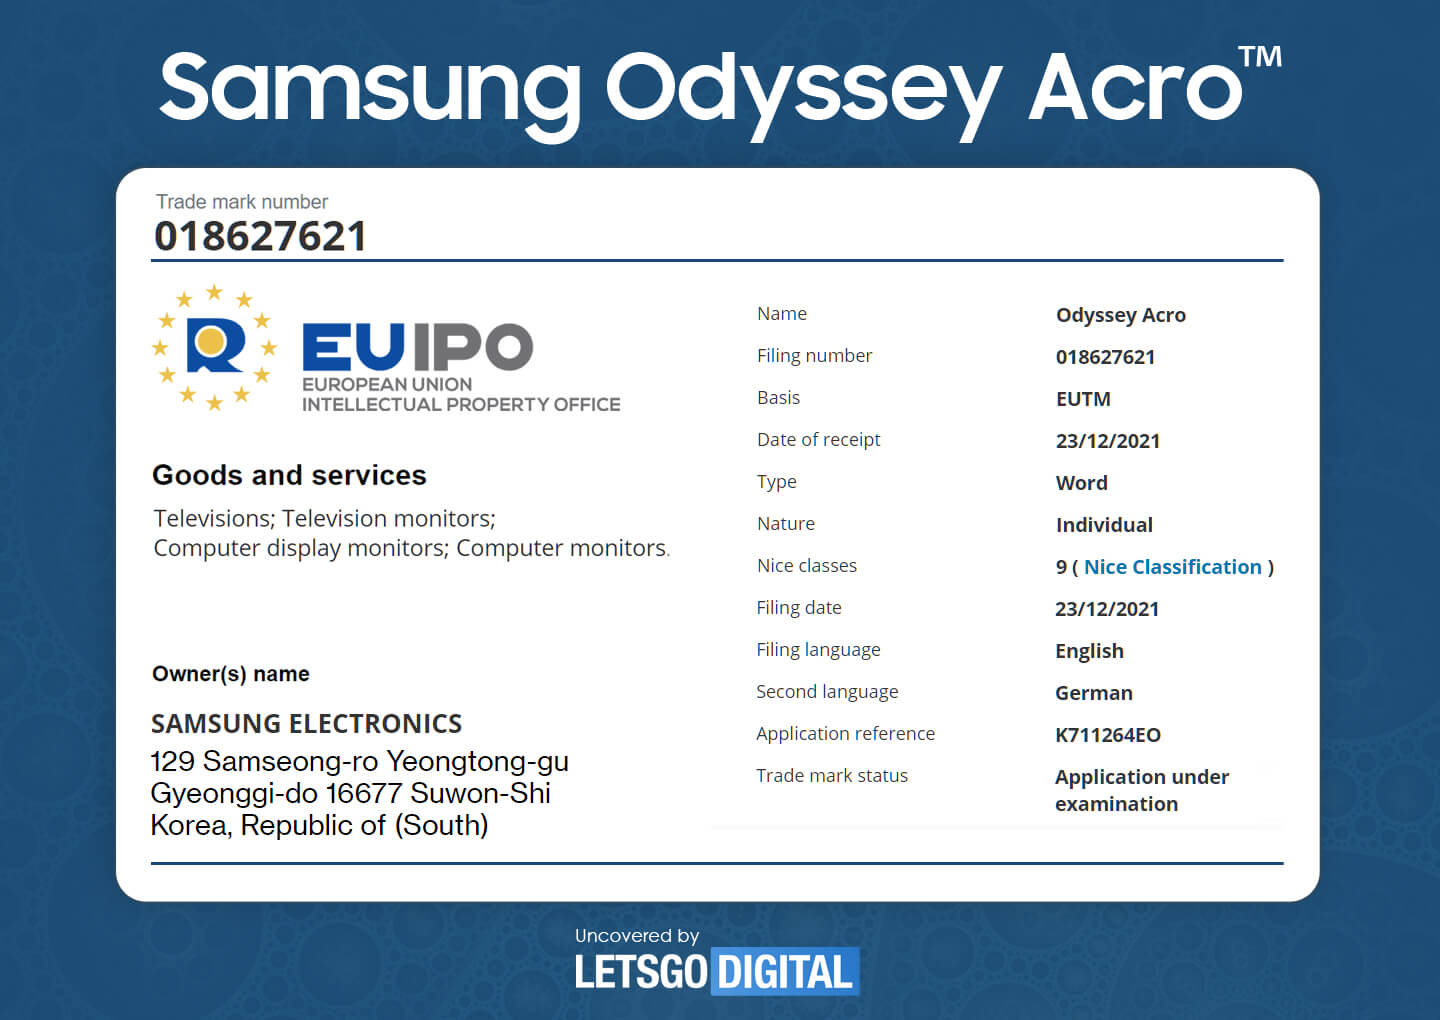 Samsung Odyssey Acro